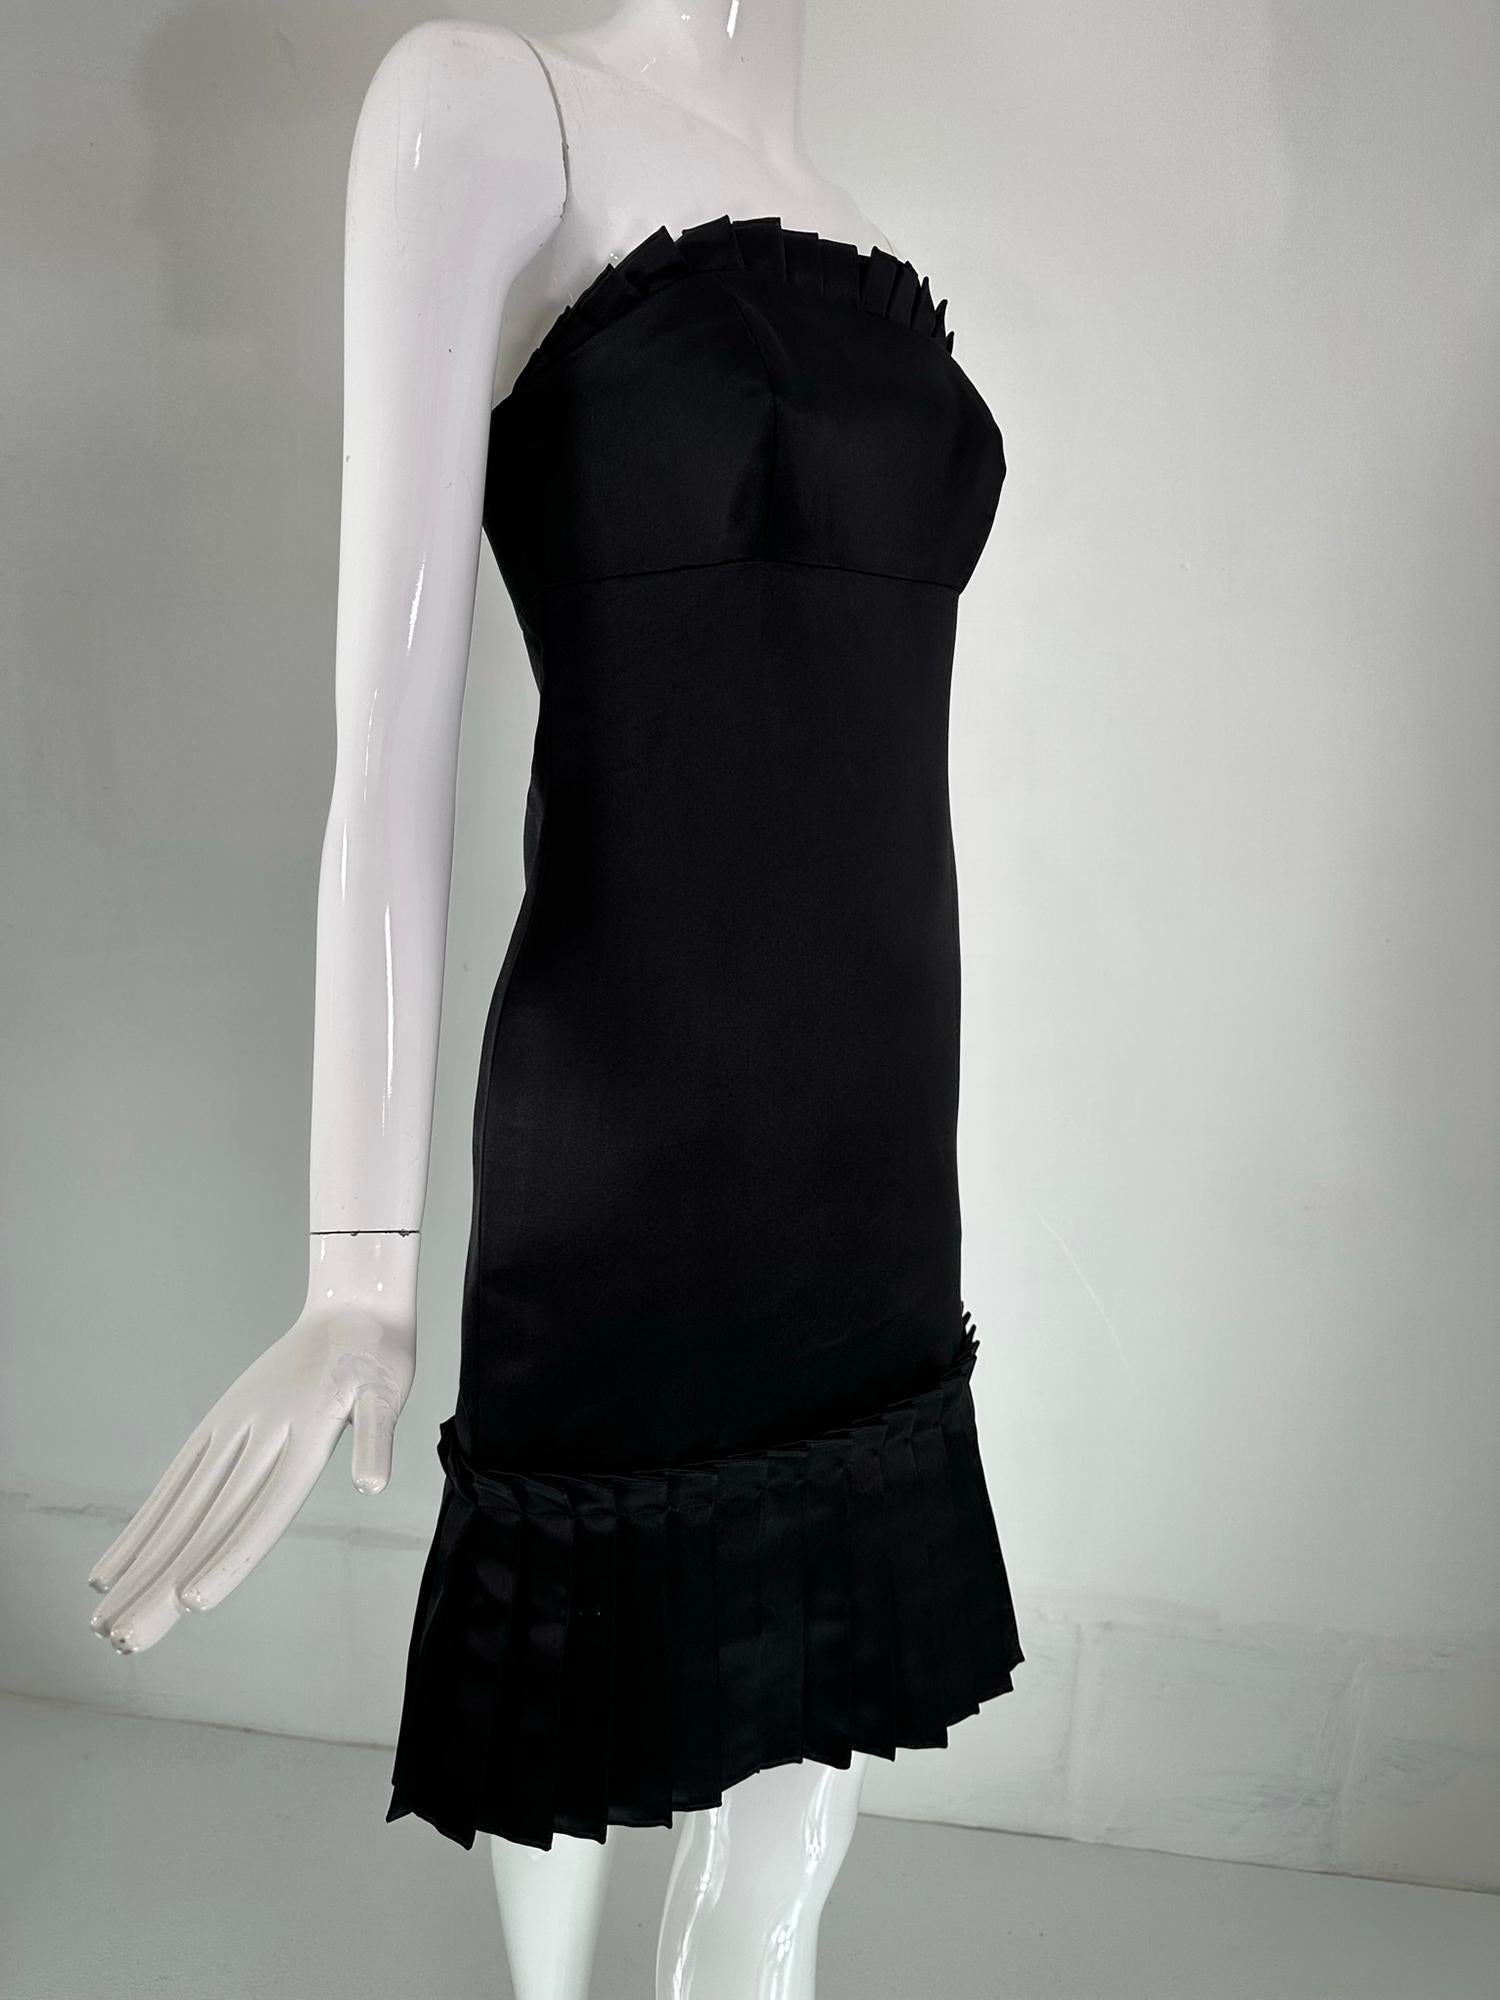 Bill Blass Black Silk Satin Strapless Cocktail Dress with Tailored Ruffles 2 For Sale 9